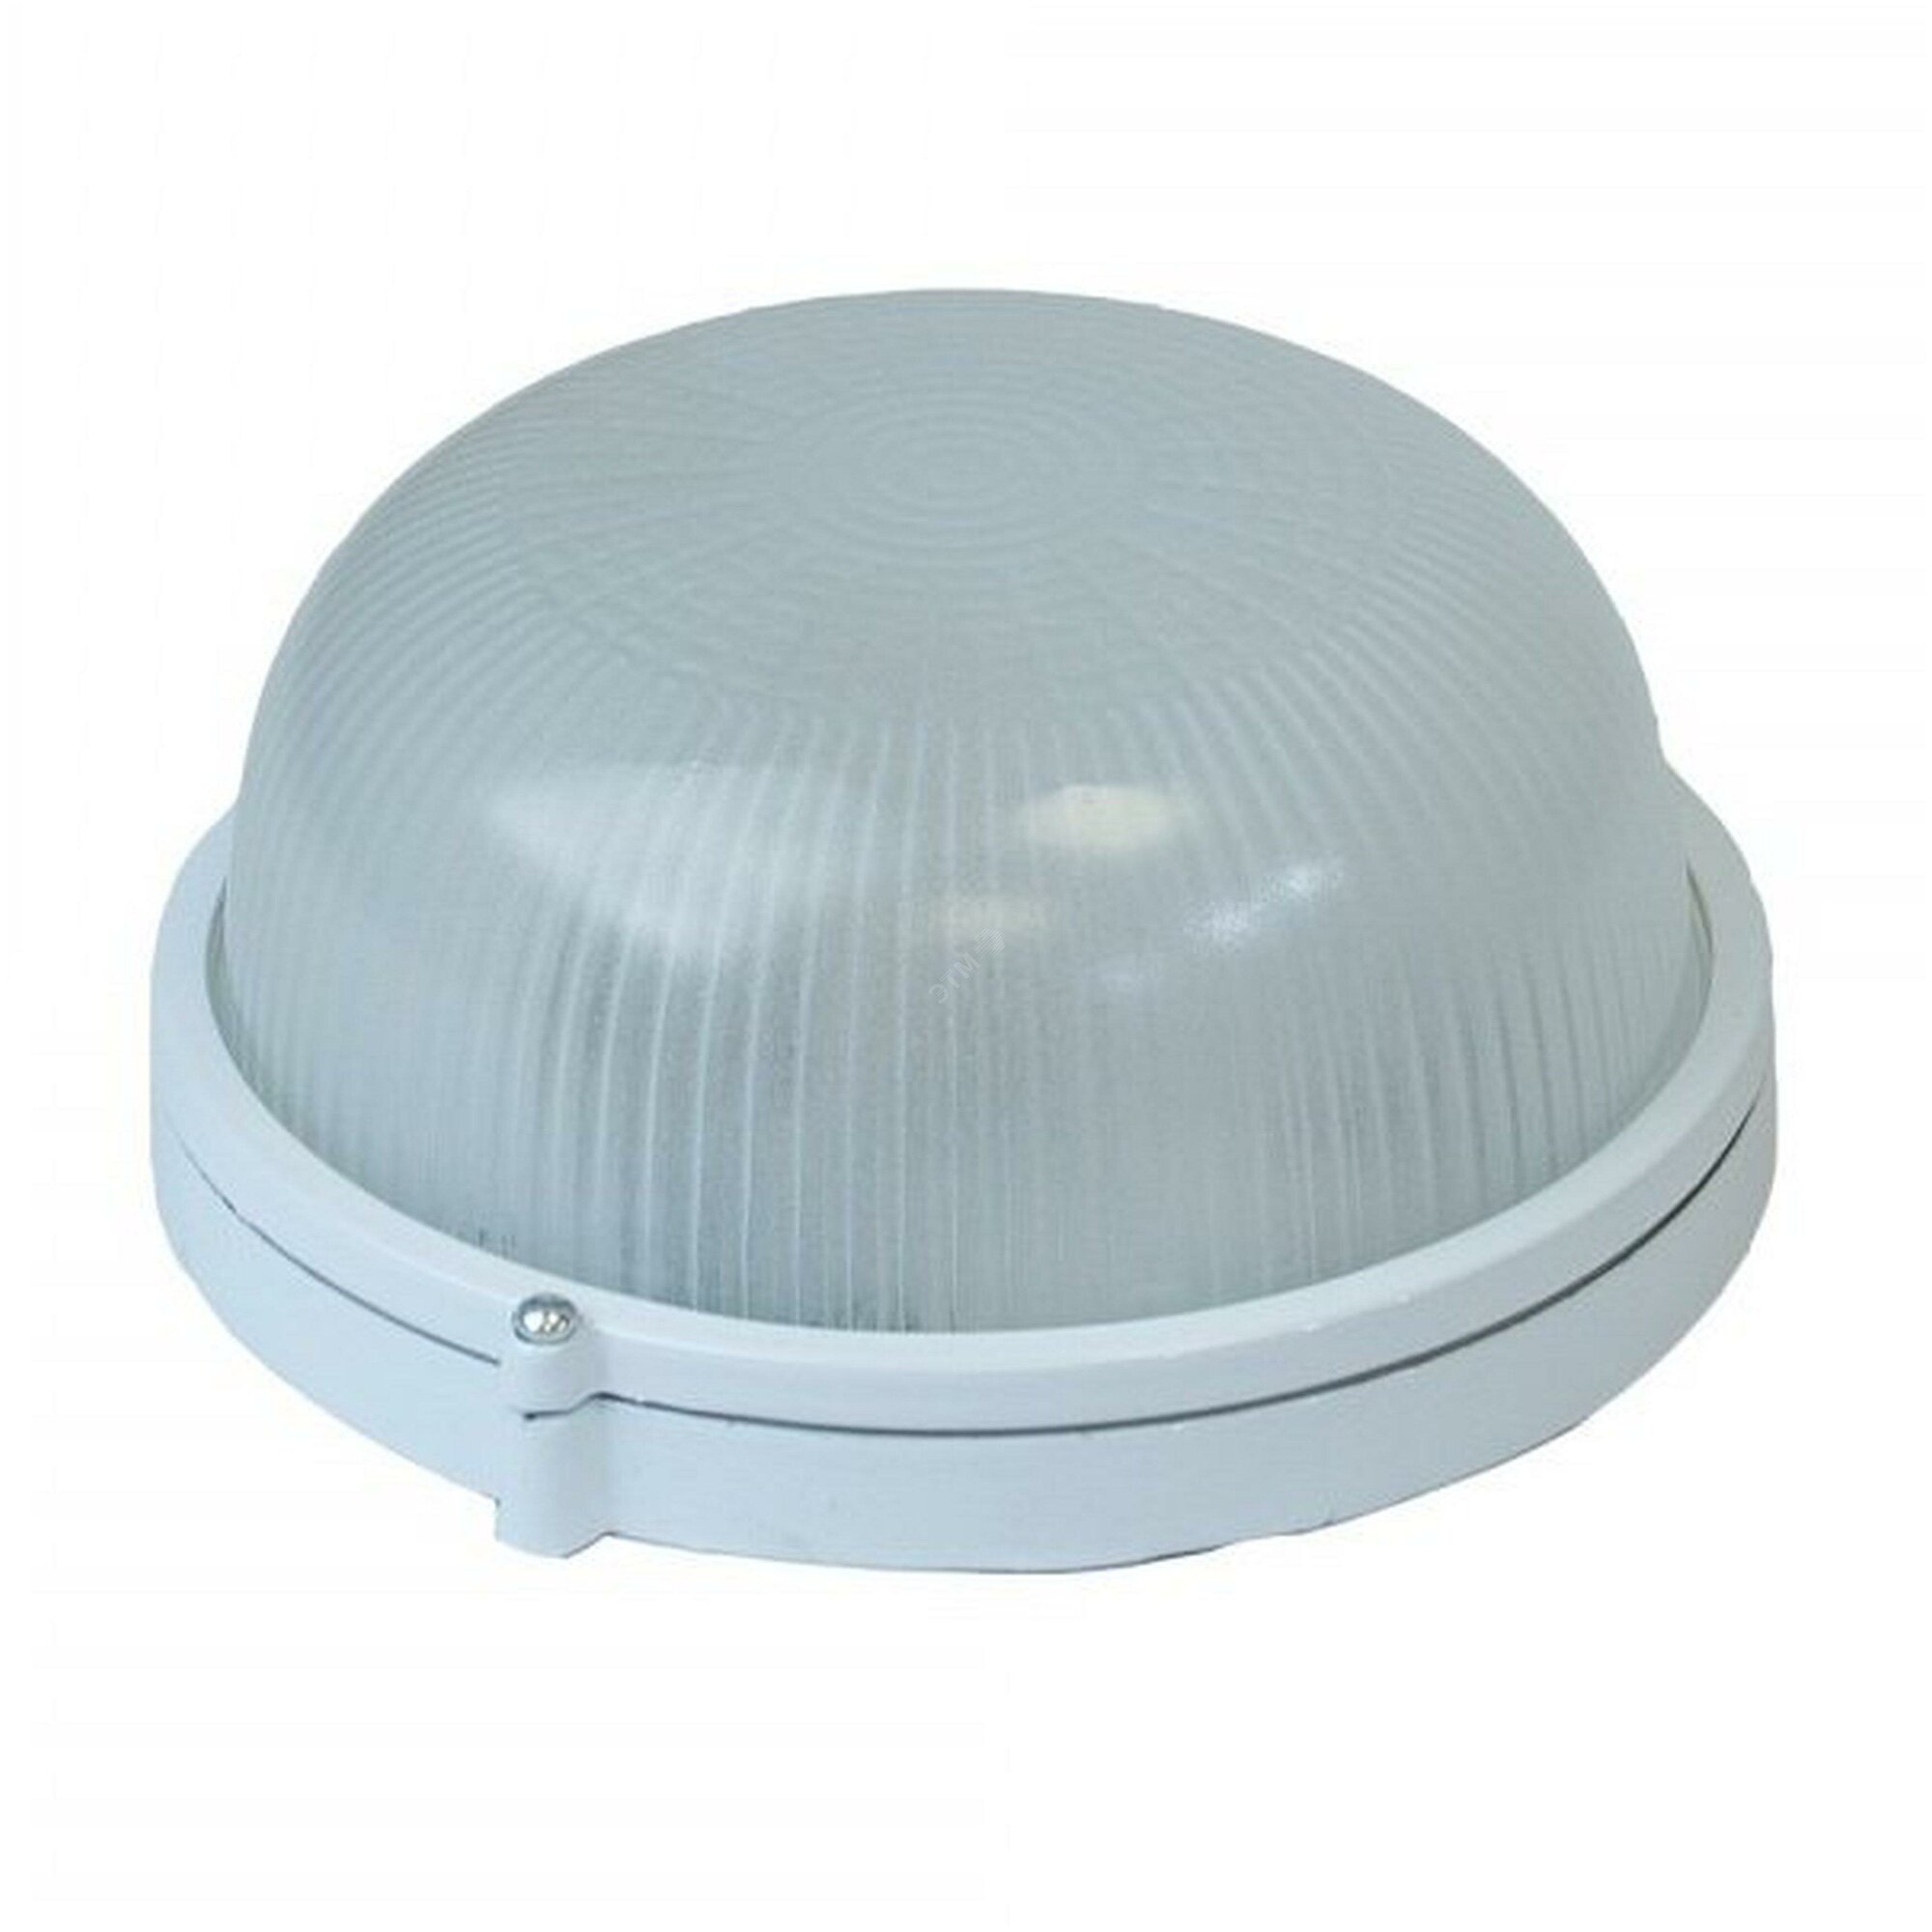 Светильник ЭРА НБП 03-60-001 Акватермо алюминий/стекло IP54 E27 max 60Вт D176 круг белый